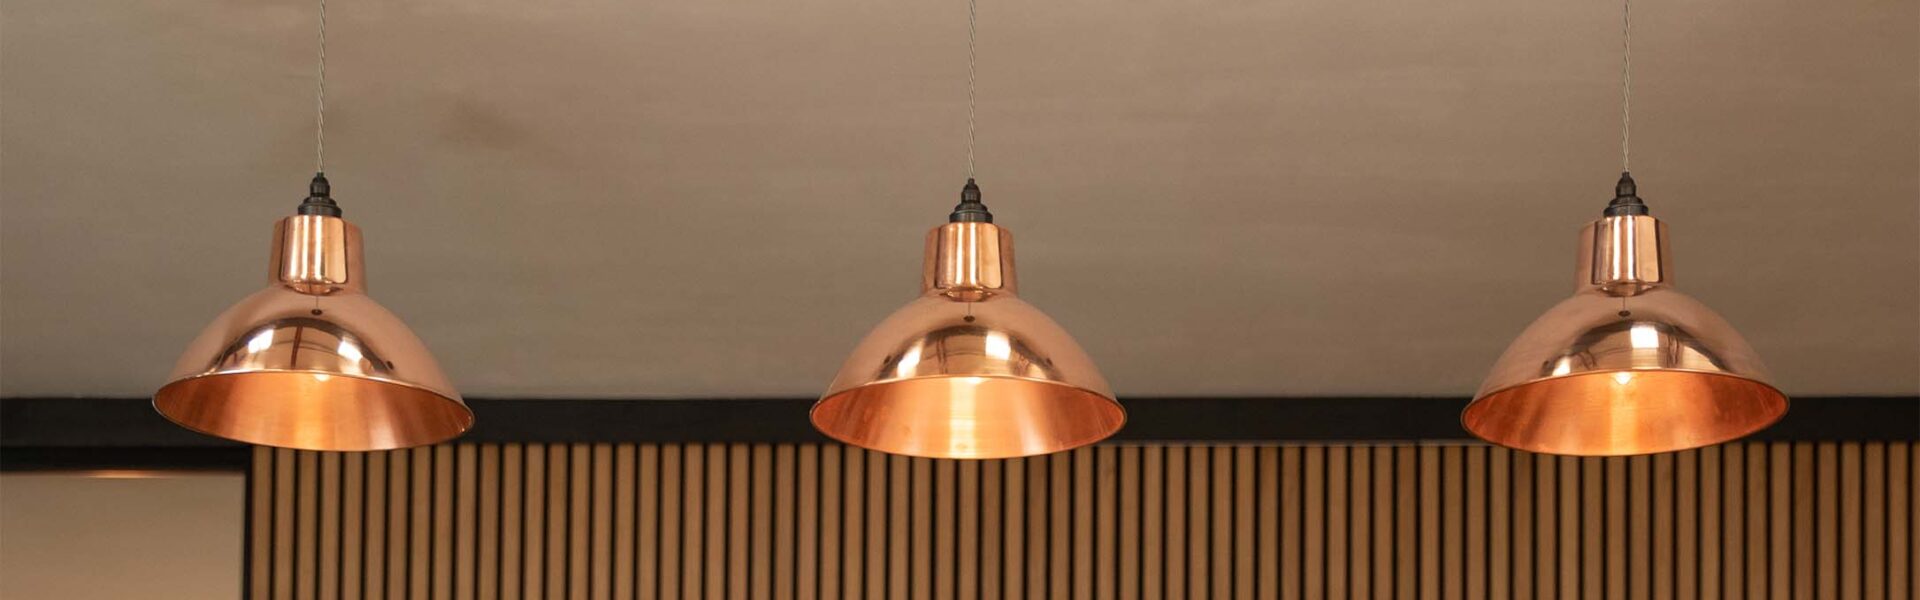 Choosing the best copper kitchen lights by Fritz fryer Lighting